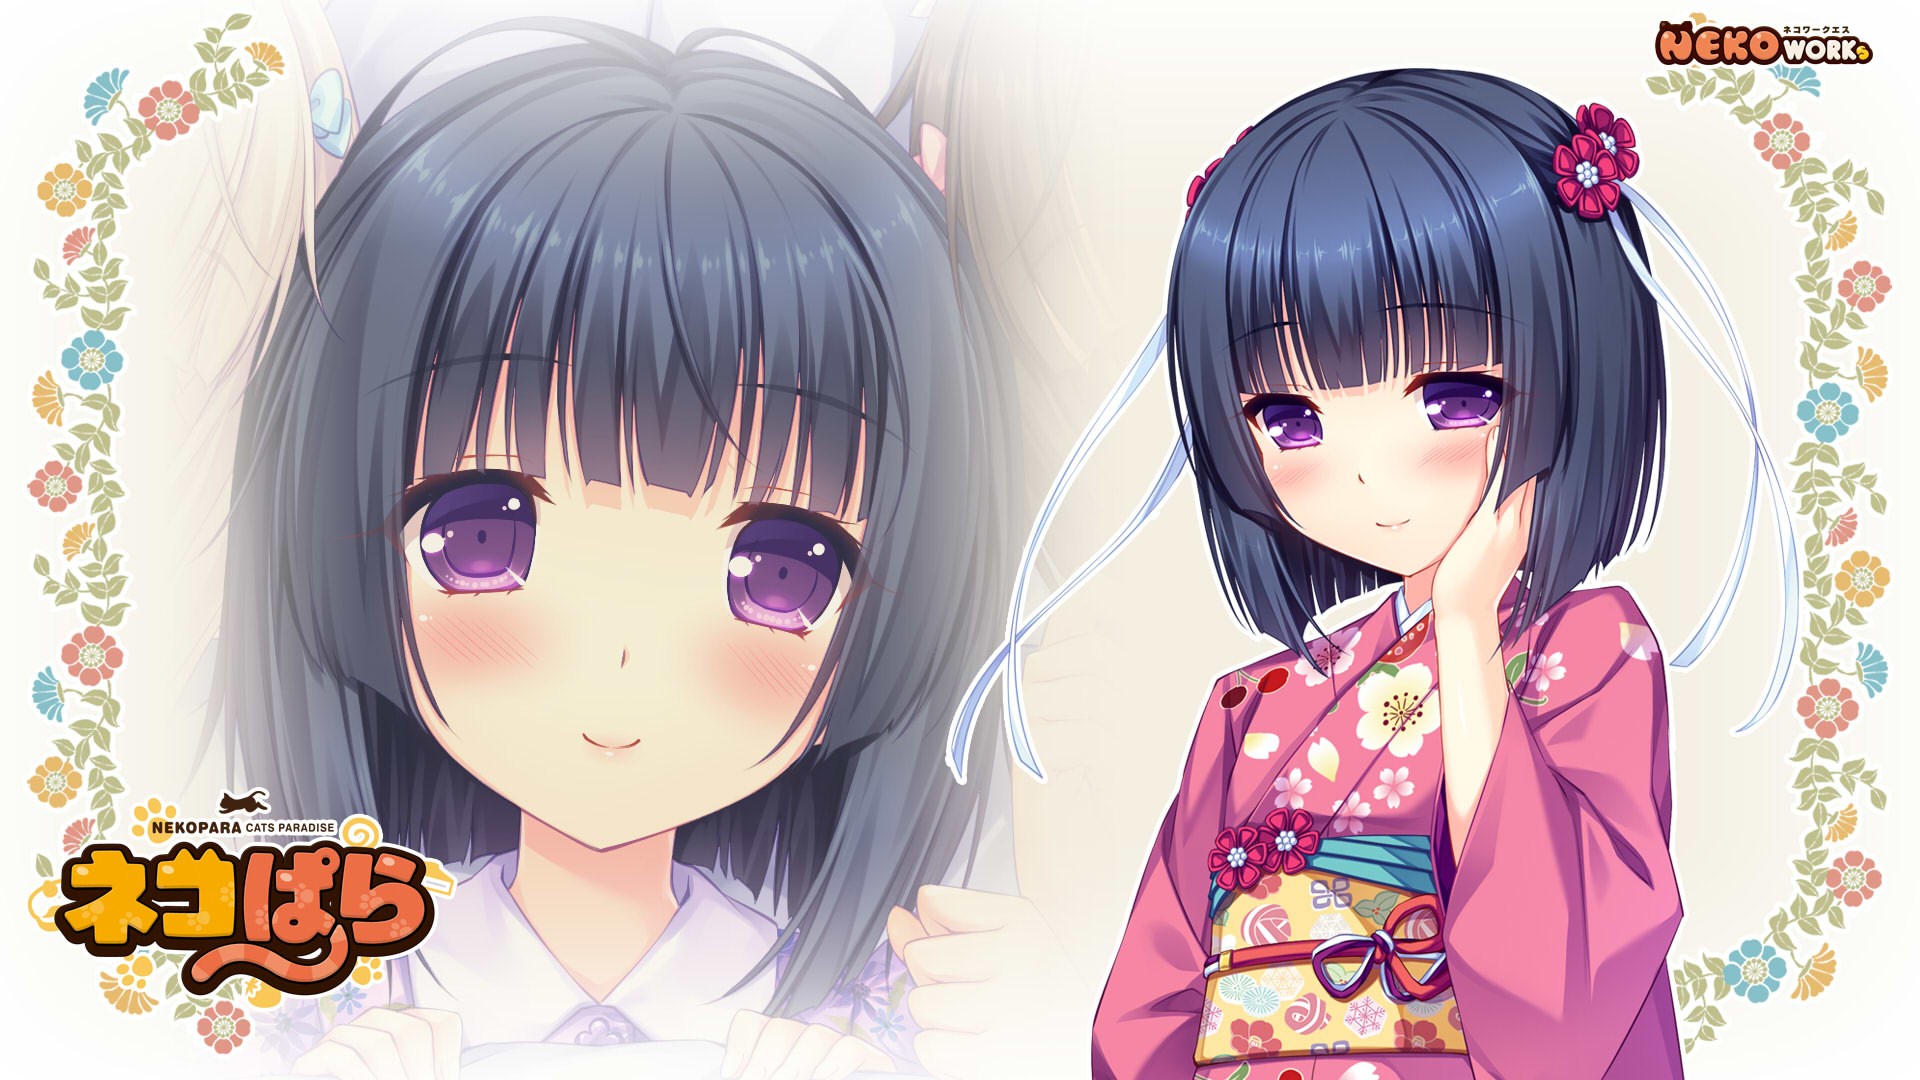 Anime 1920x1080 anime anime girls Nekopara cat girl Japanese clothes kimono smiling looking at viewer shoulder length hair face closeup purple eyes blue hair